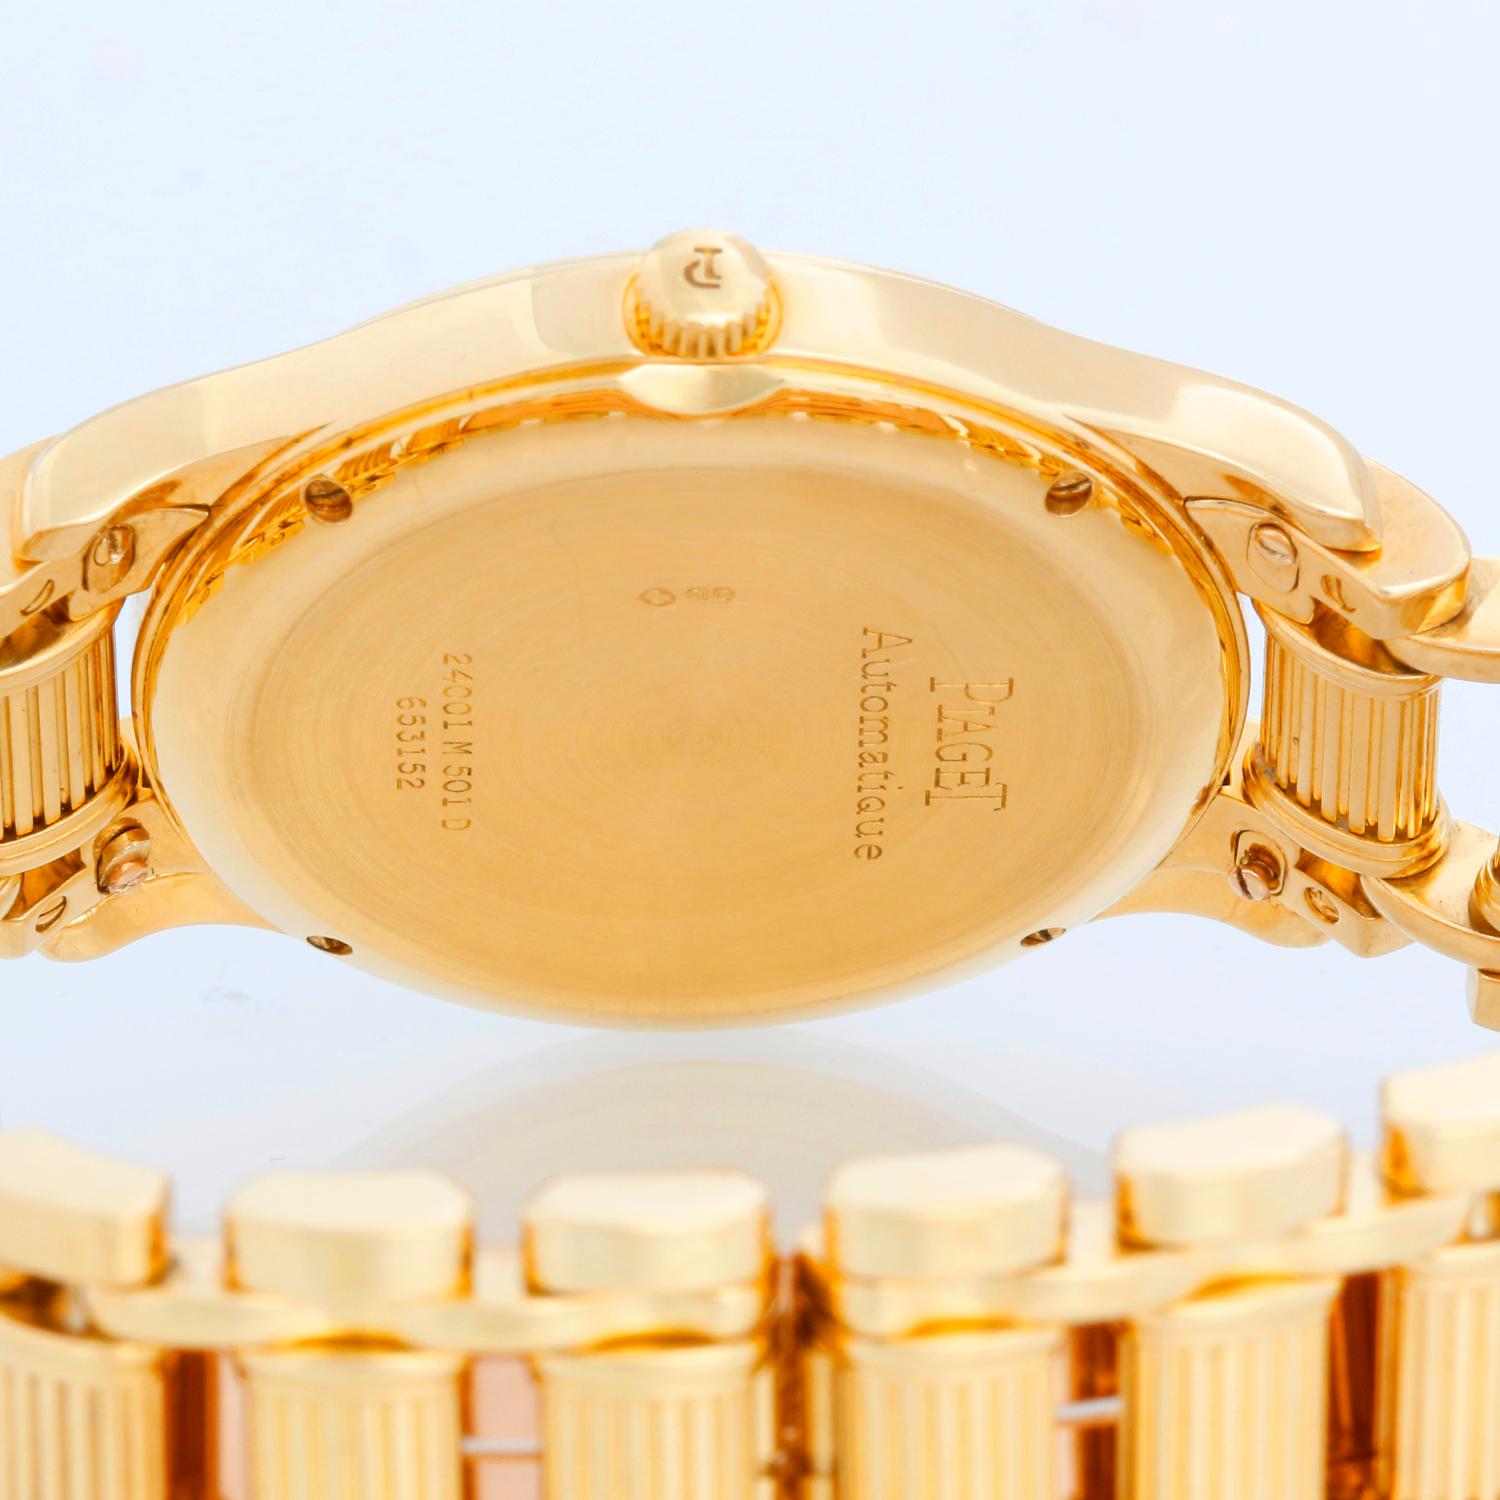 rolex geneve cellini gold nugget watch